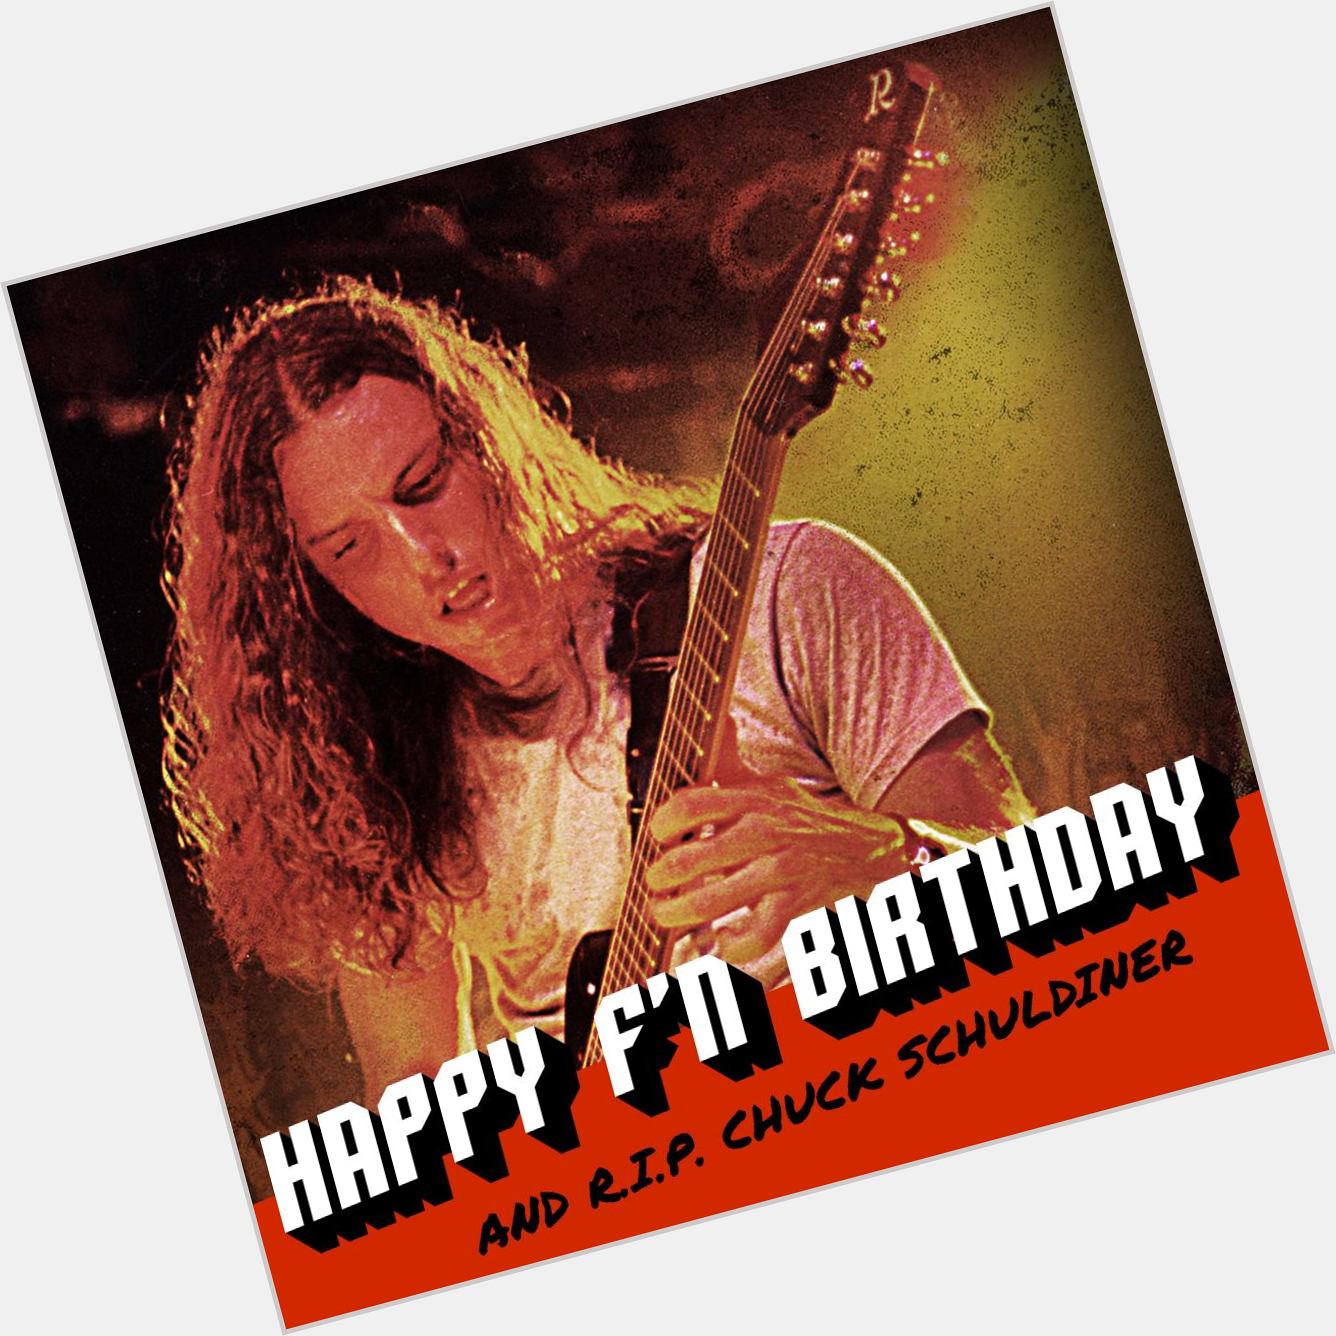 May 13th, 1967 
Happy Birthday Chuck Schuldiner 